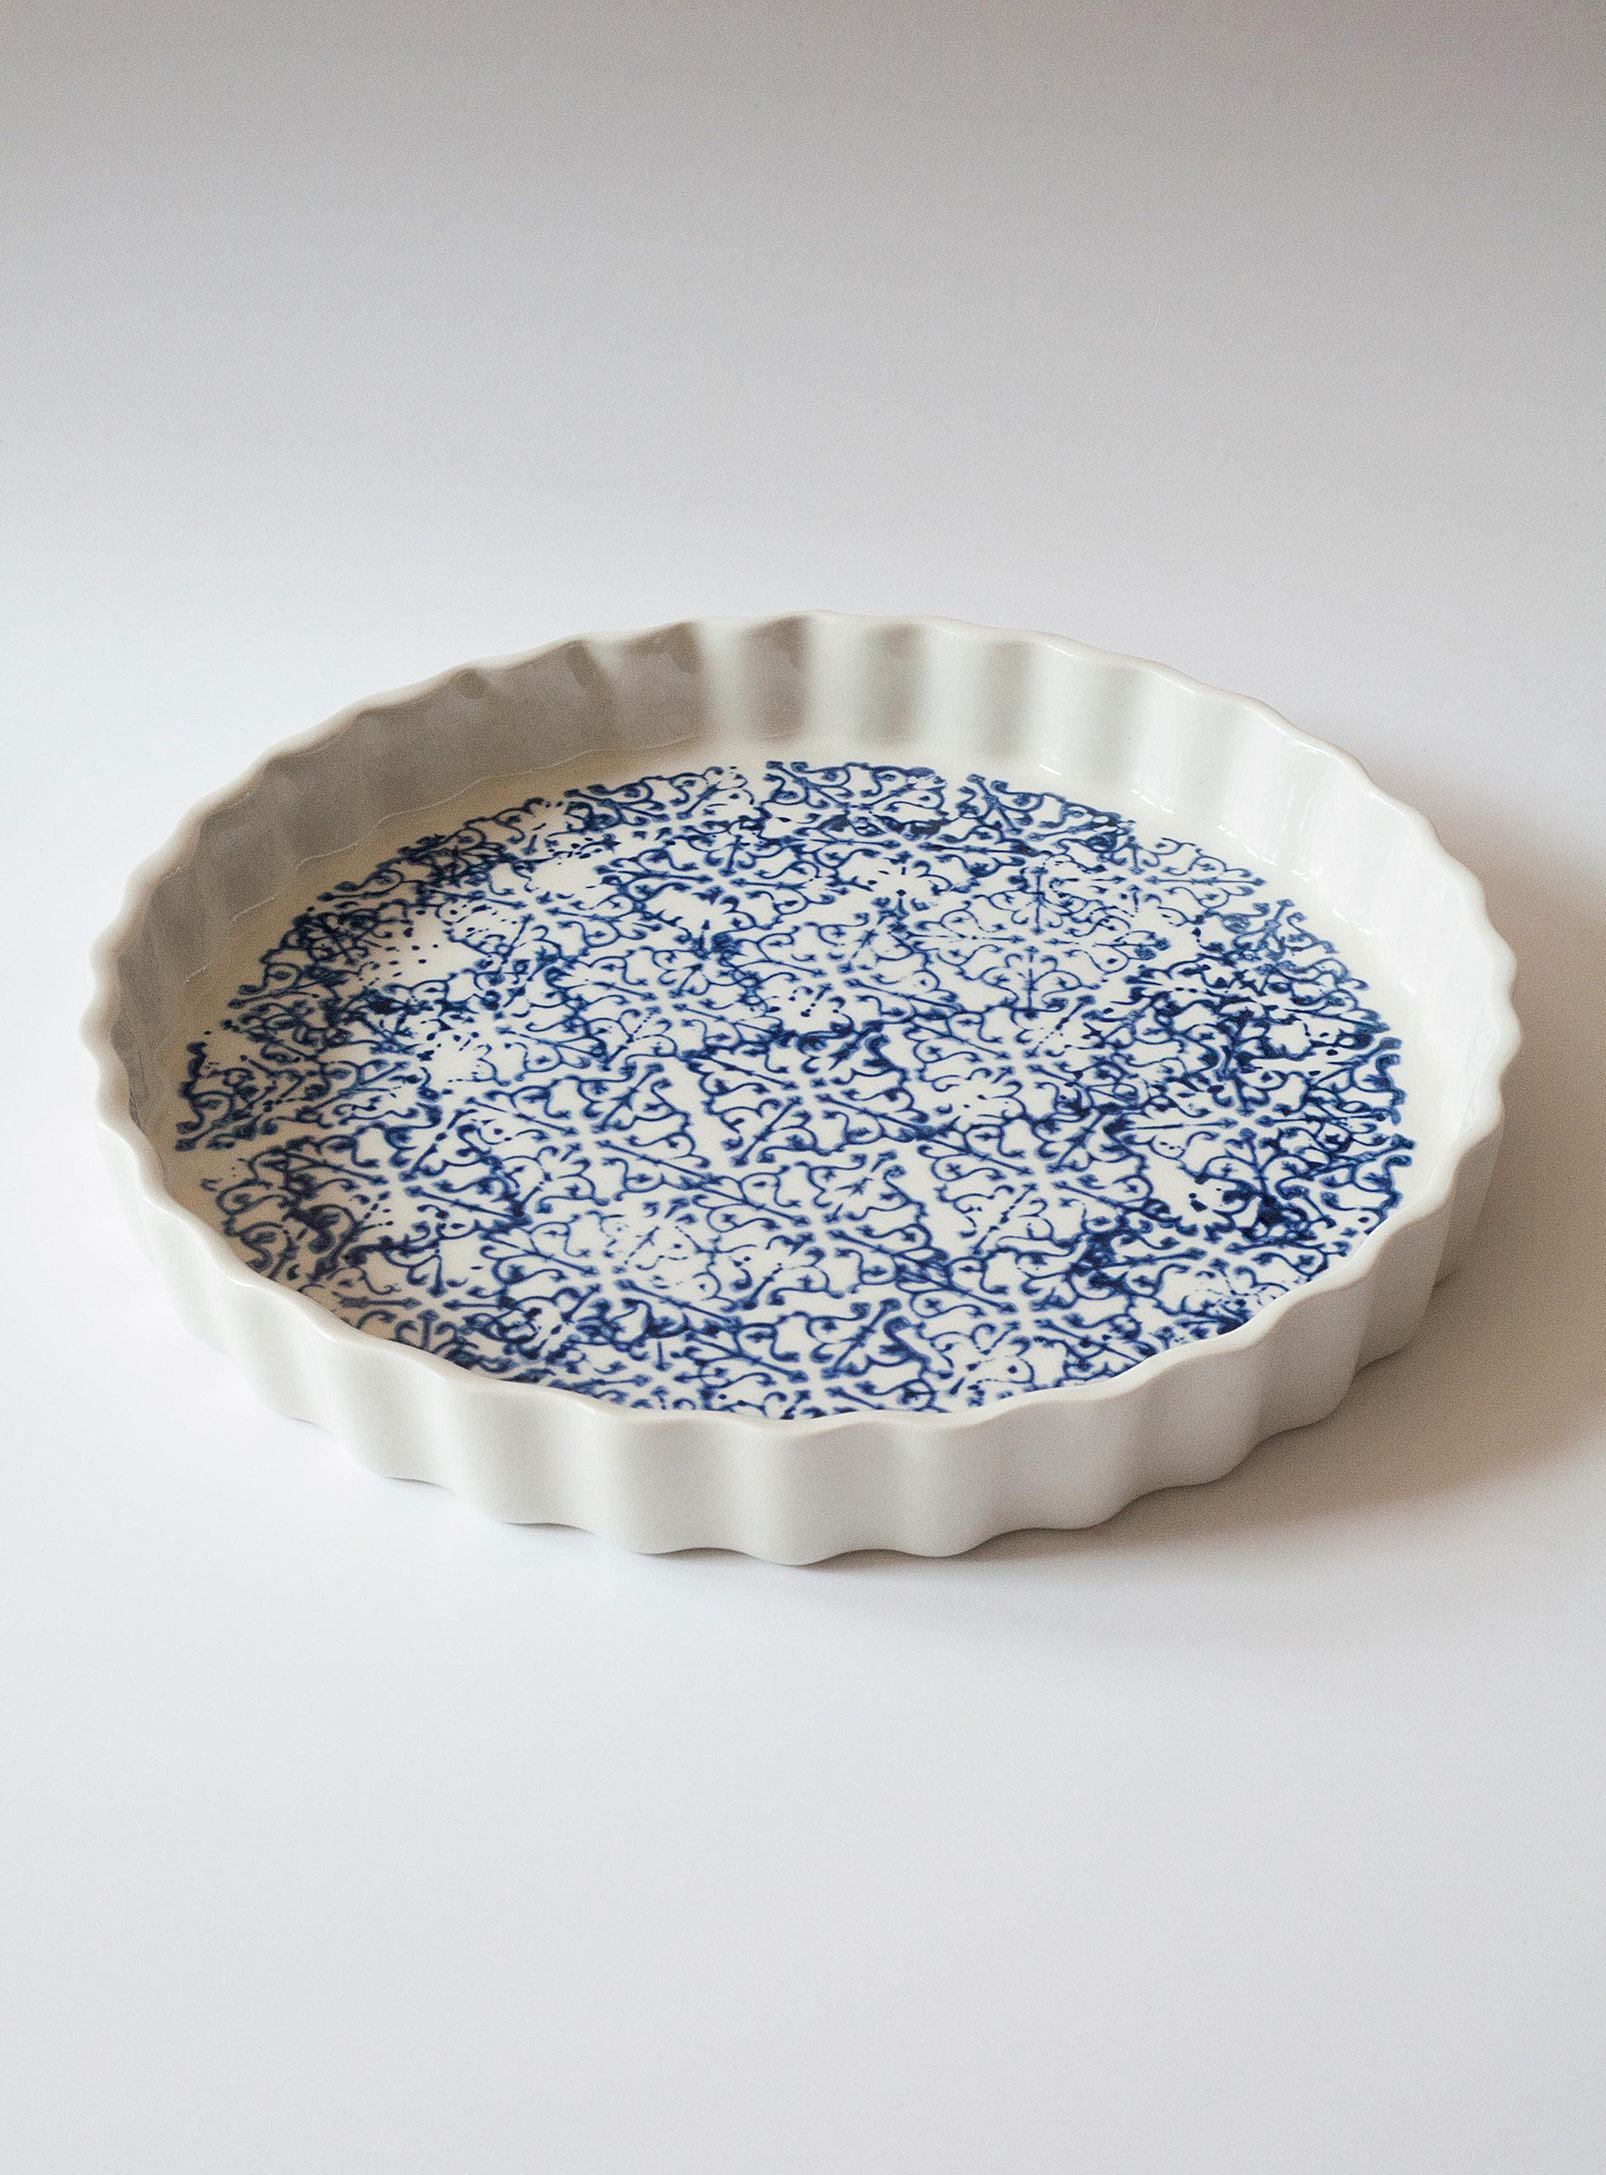 Art & Manufacture - Antique ornamental pattern pie plate